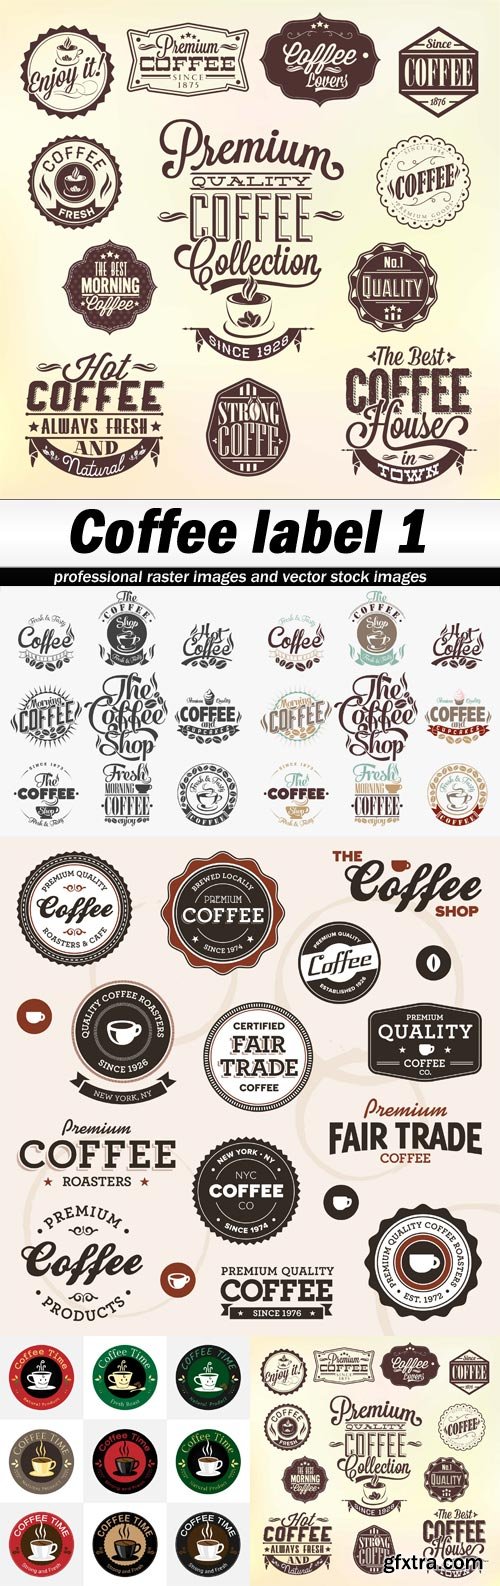 Coffee label 1